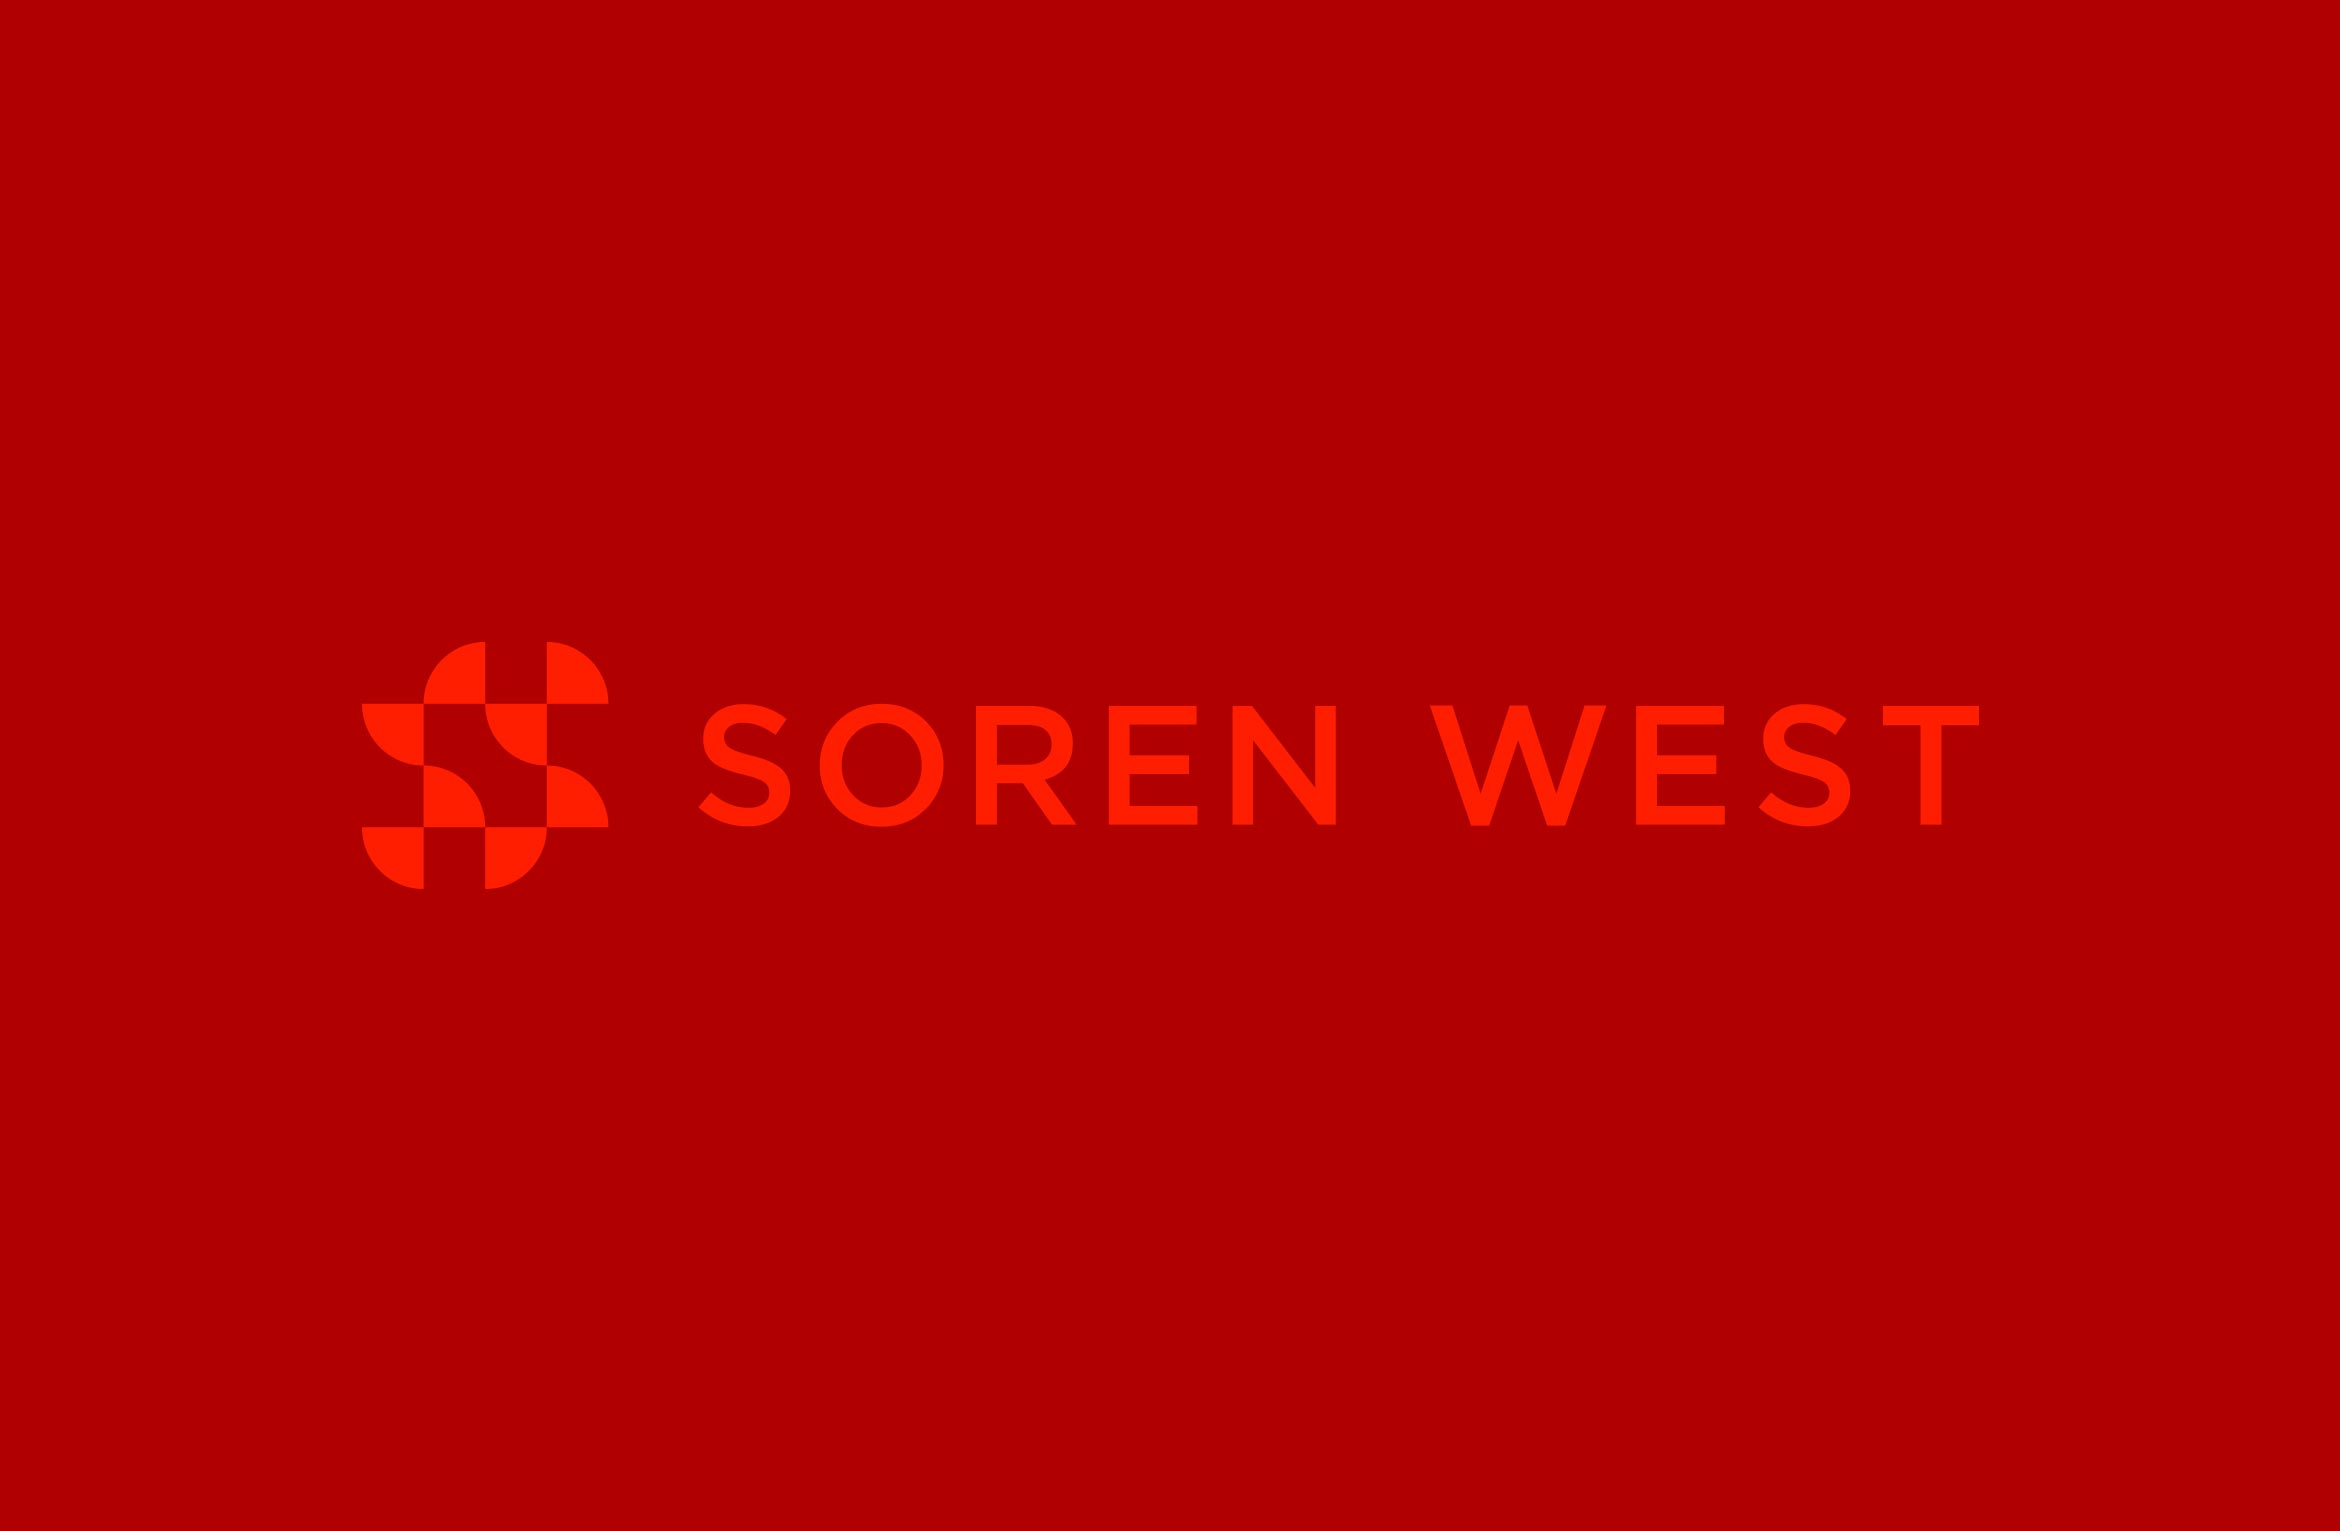 red soren west logo on deep red